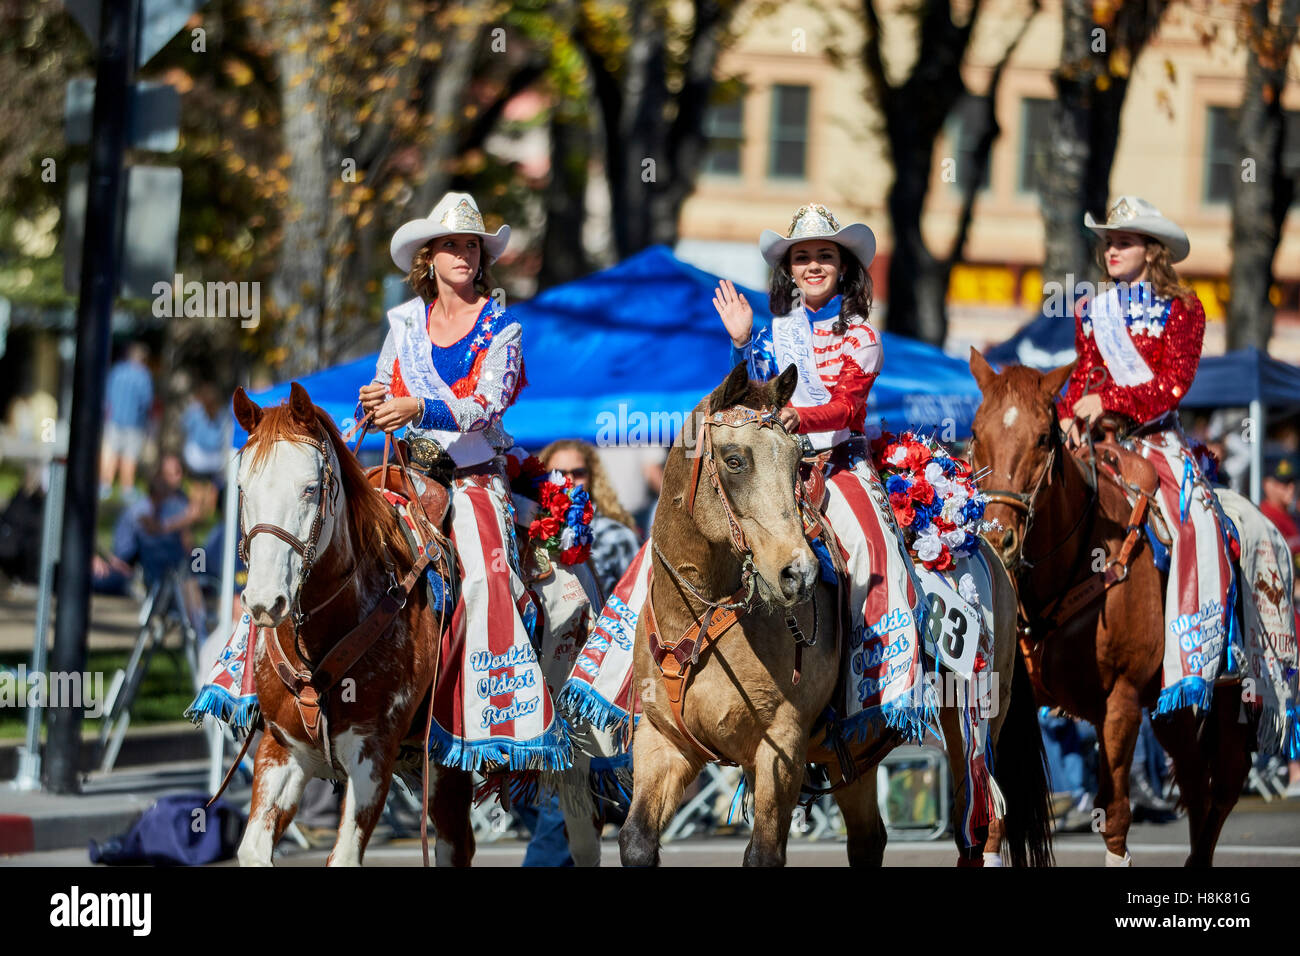 Prescott, AZ, USA - November 10, 2016: Rodeo women on horseback at the Veterans Day Parade in Prescott, Arizona, USA. Stock Photo